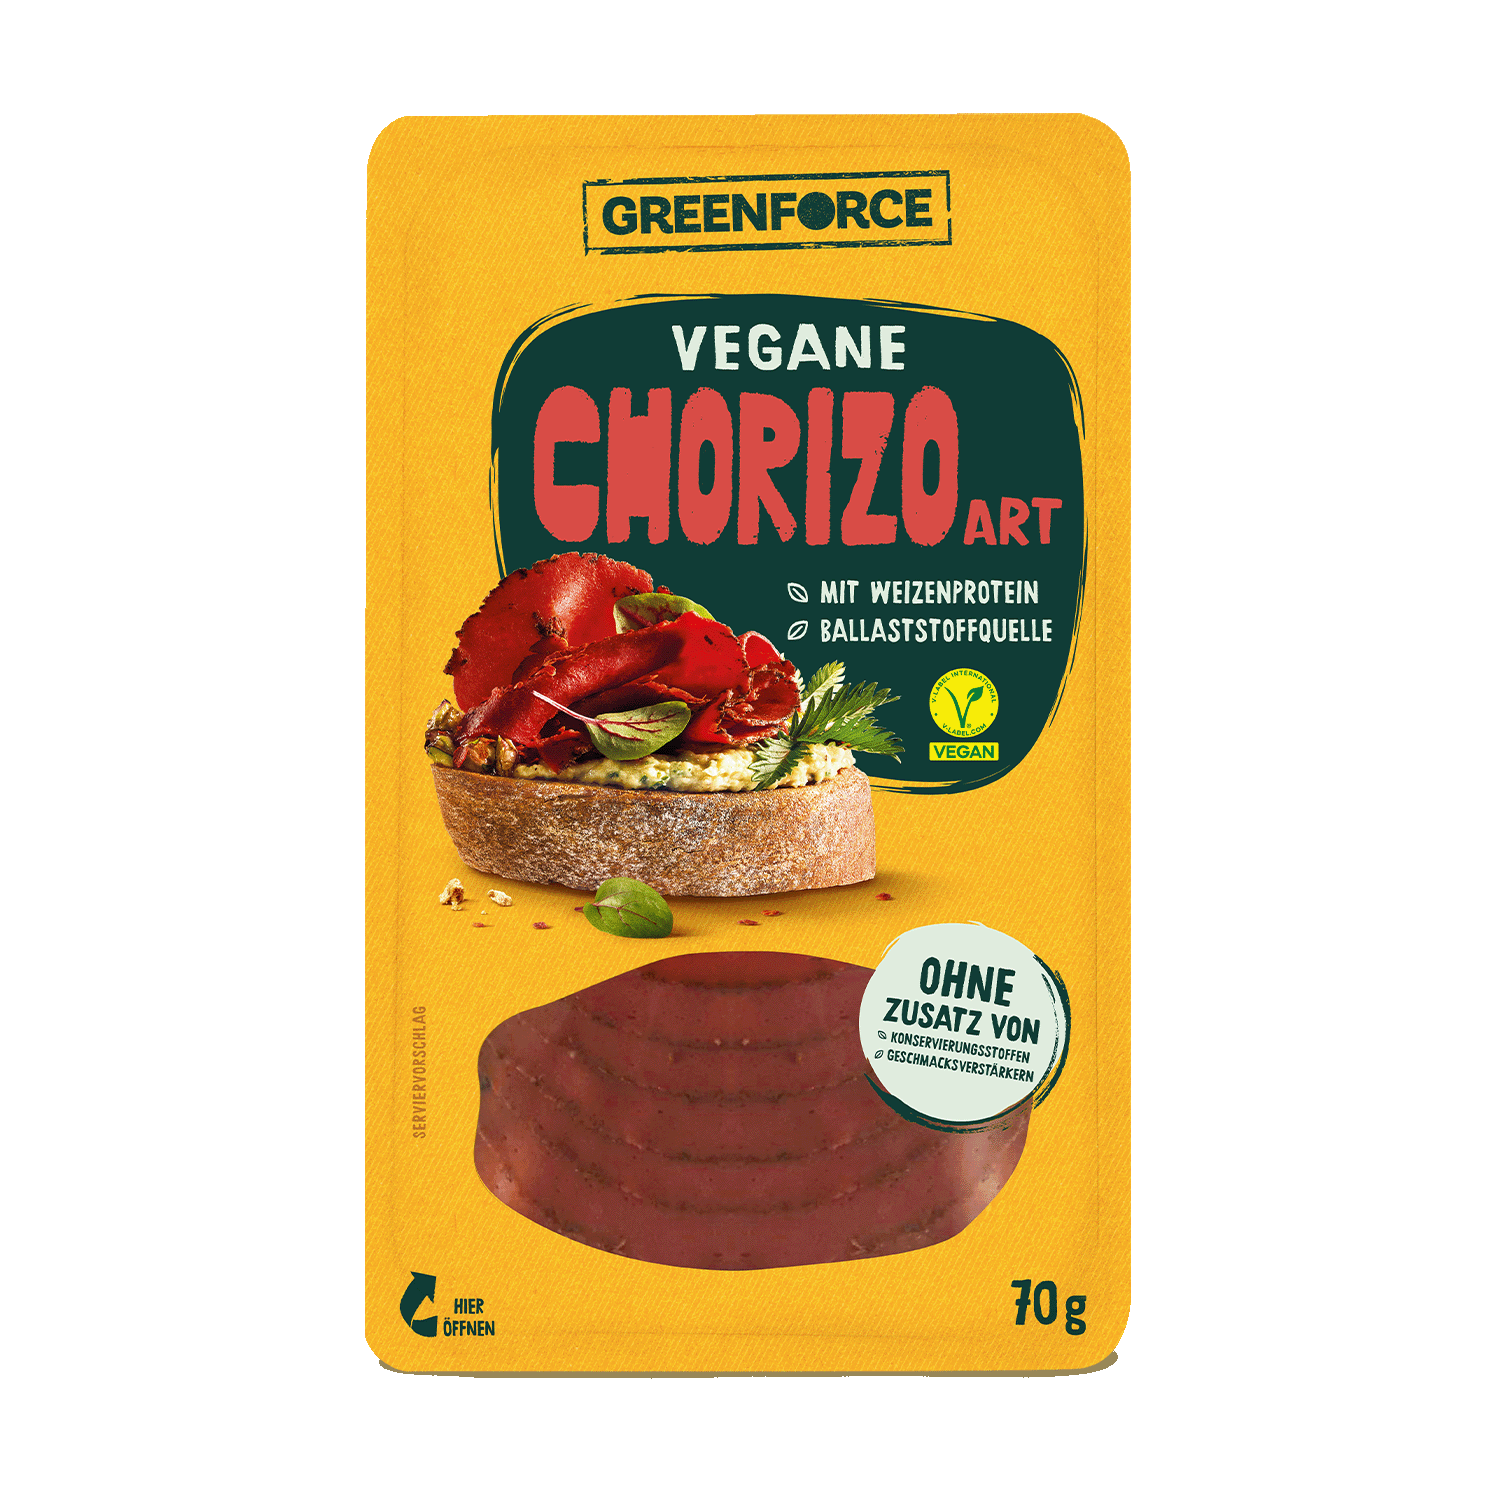 Vegan Cold Cuts Chorizo Style, 70g